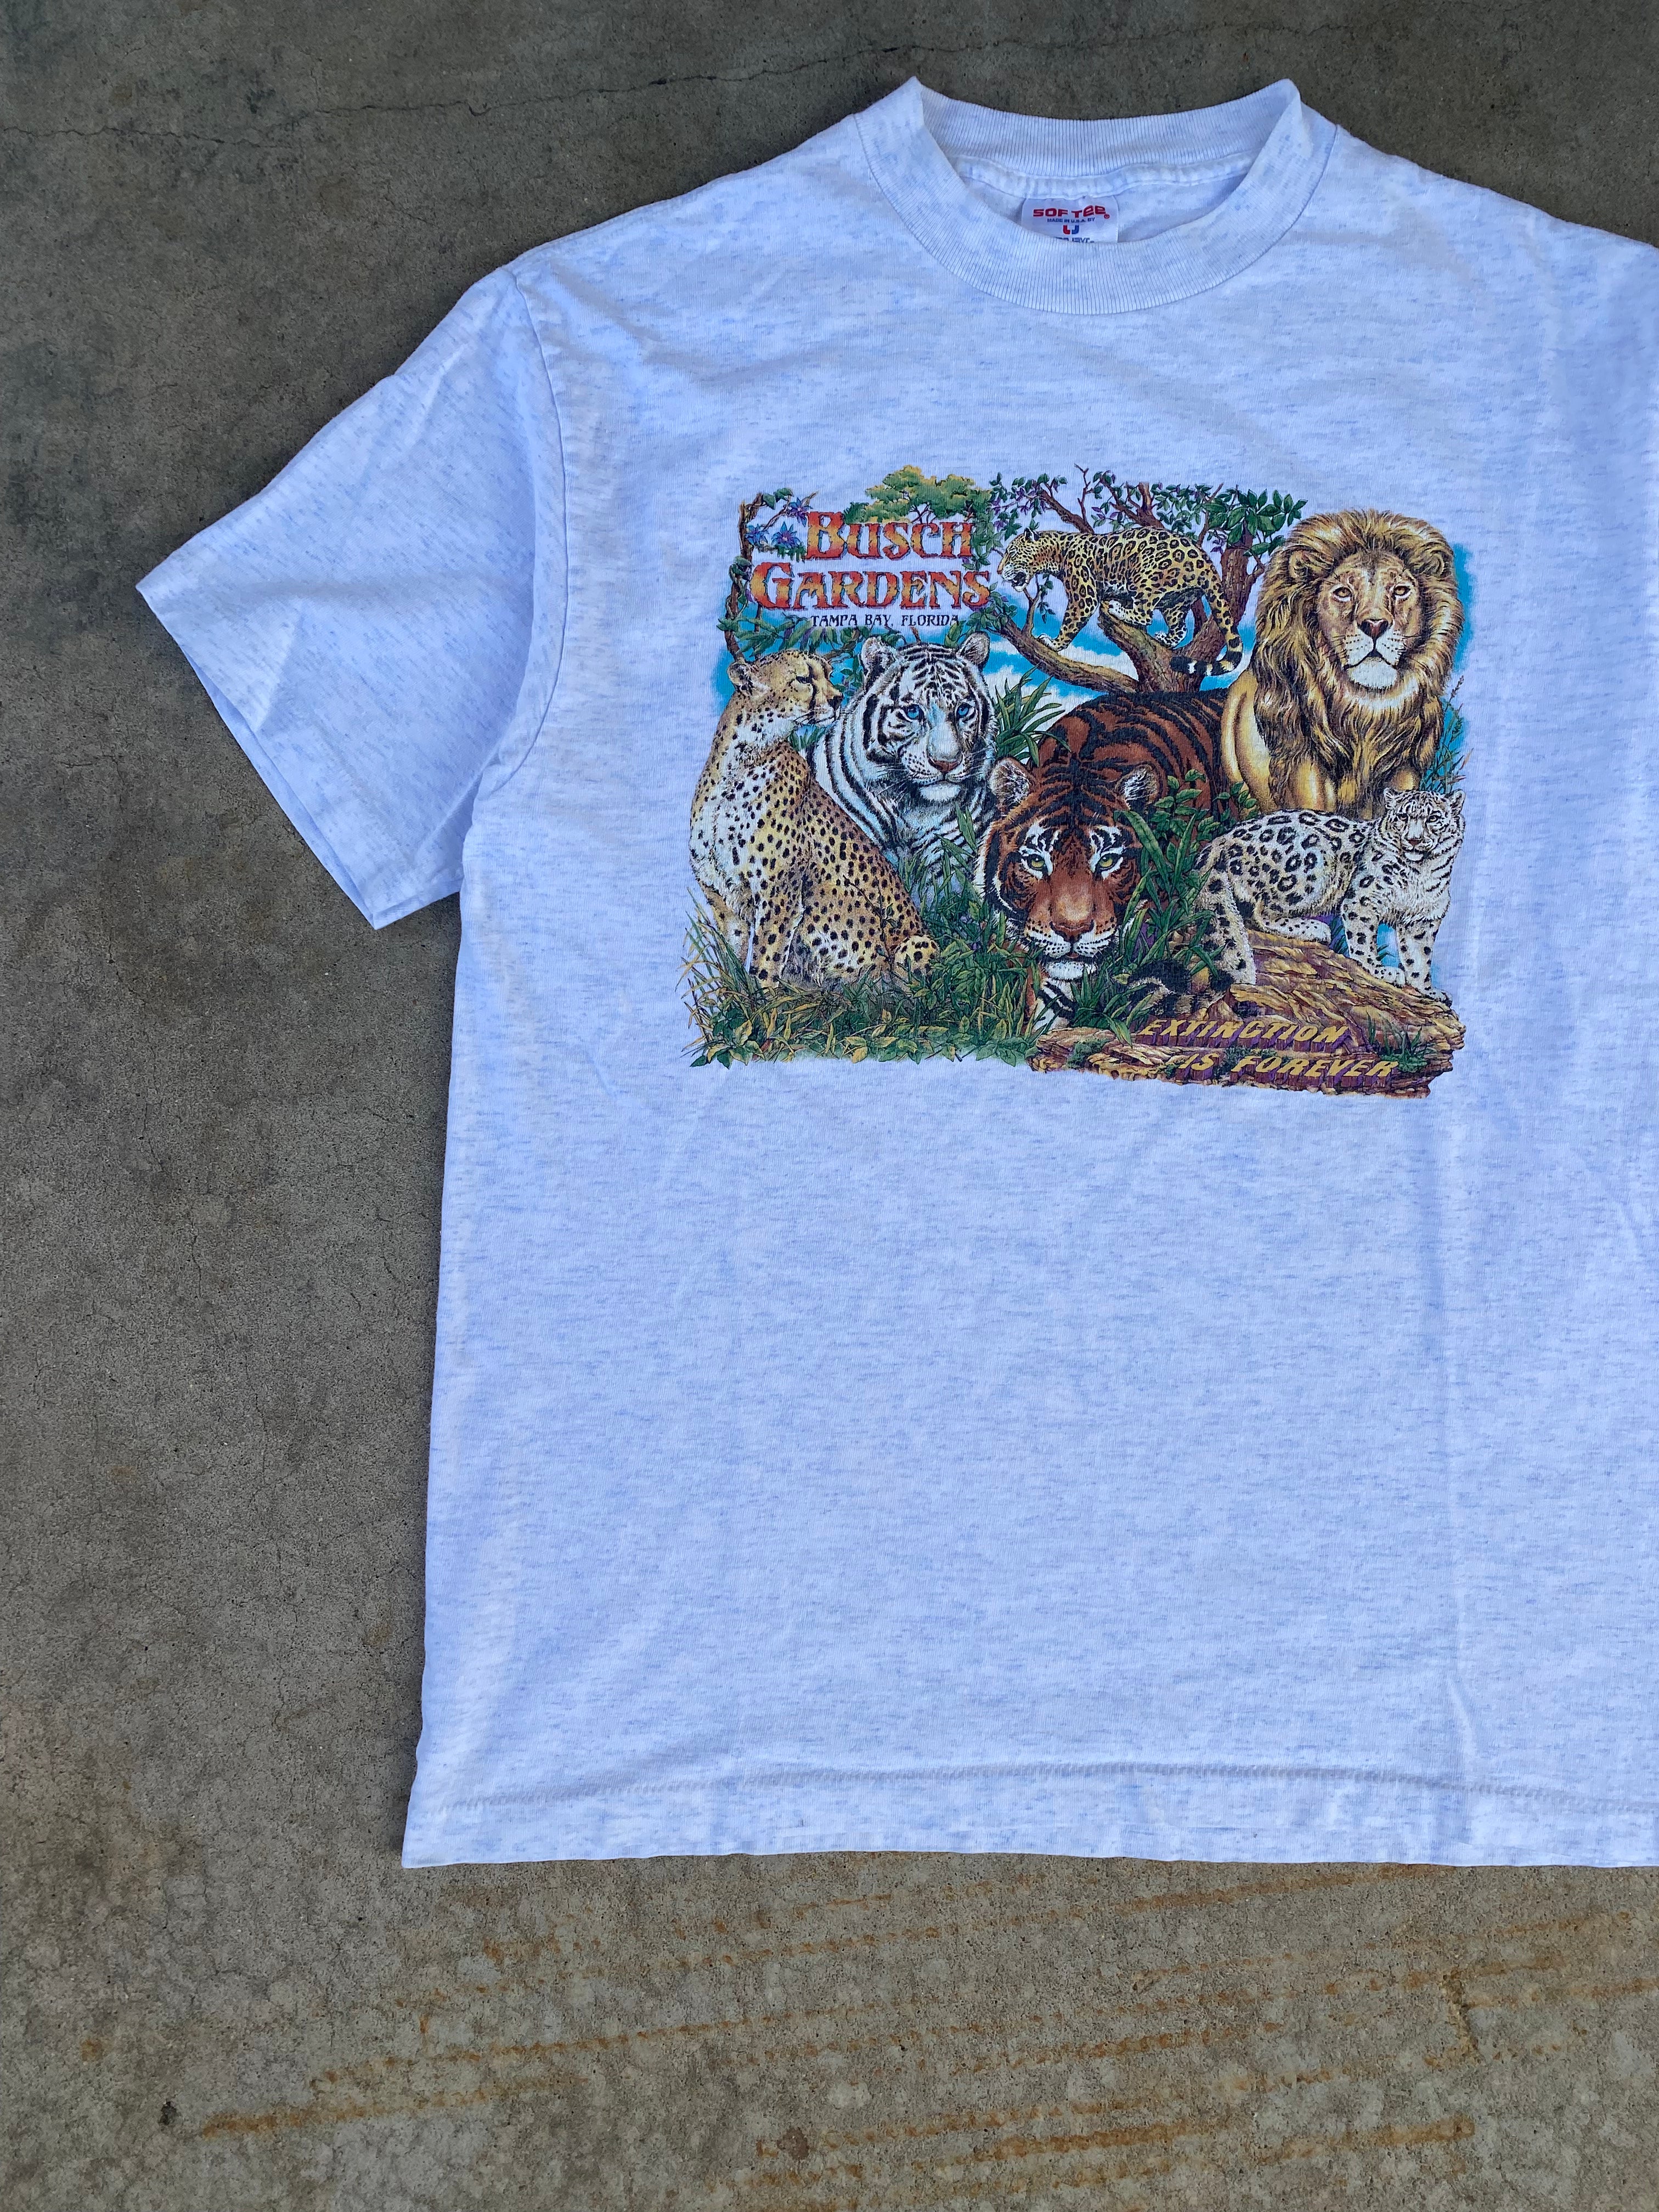 1990s Busch Gardens Extinction is Forever T-Shirt (M/L)